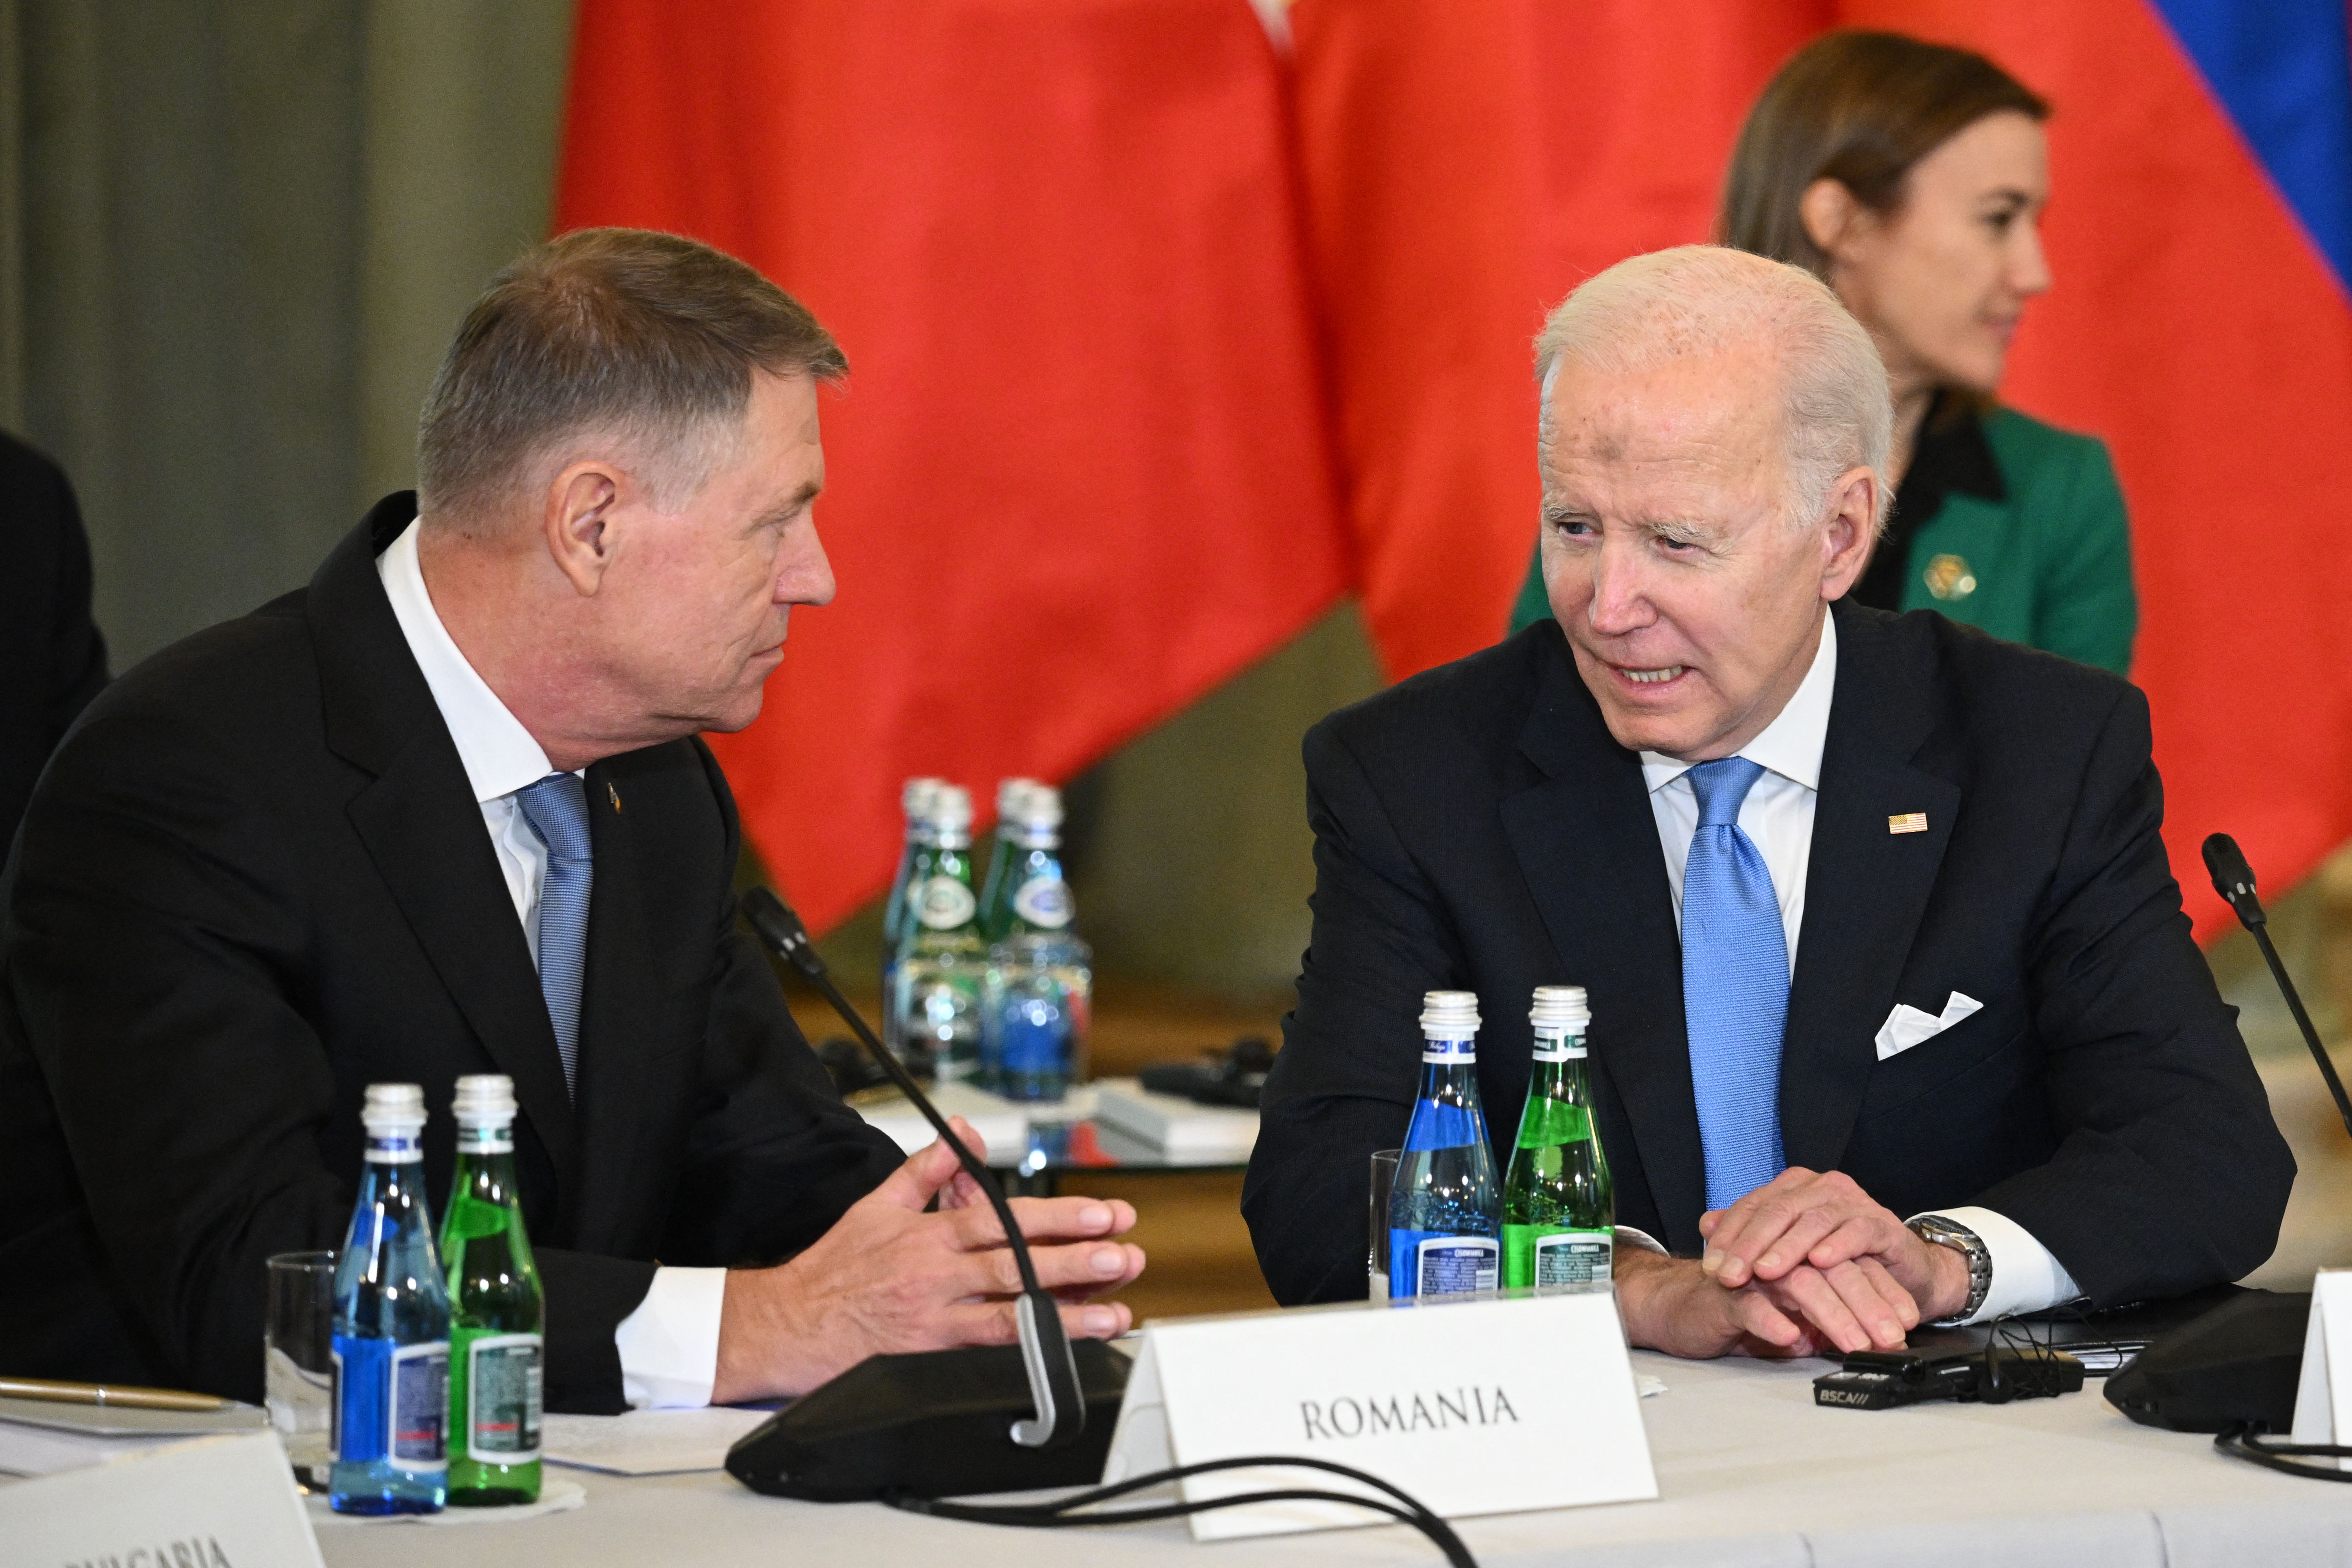 Biden speaking with Romanian President Klaus Iohannis